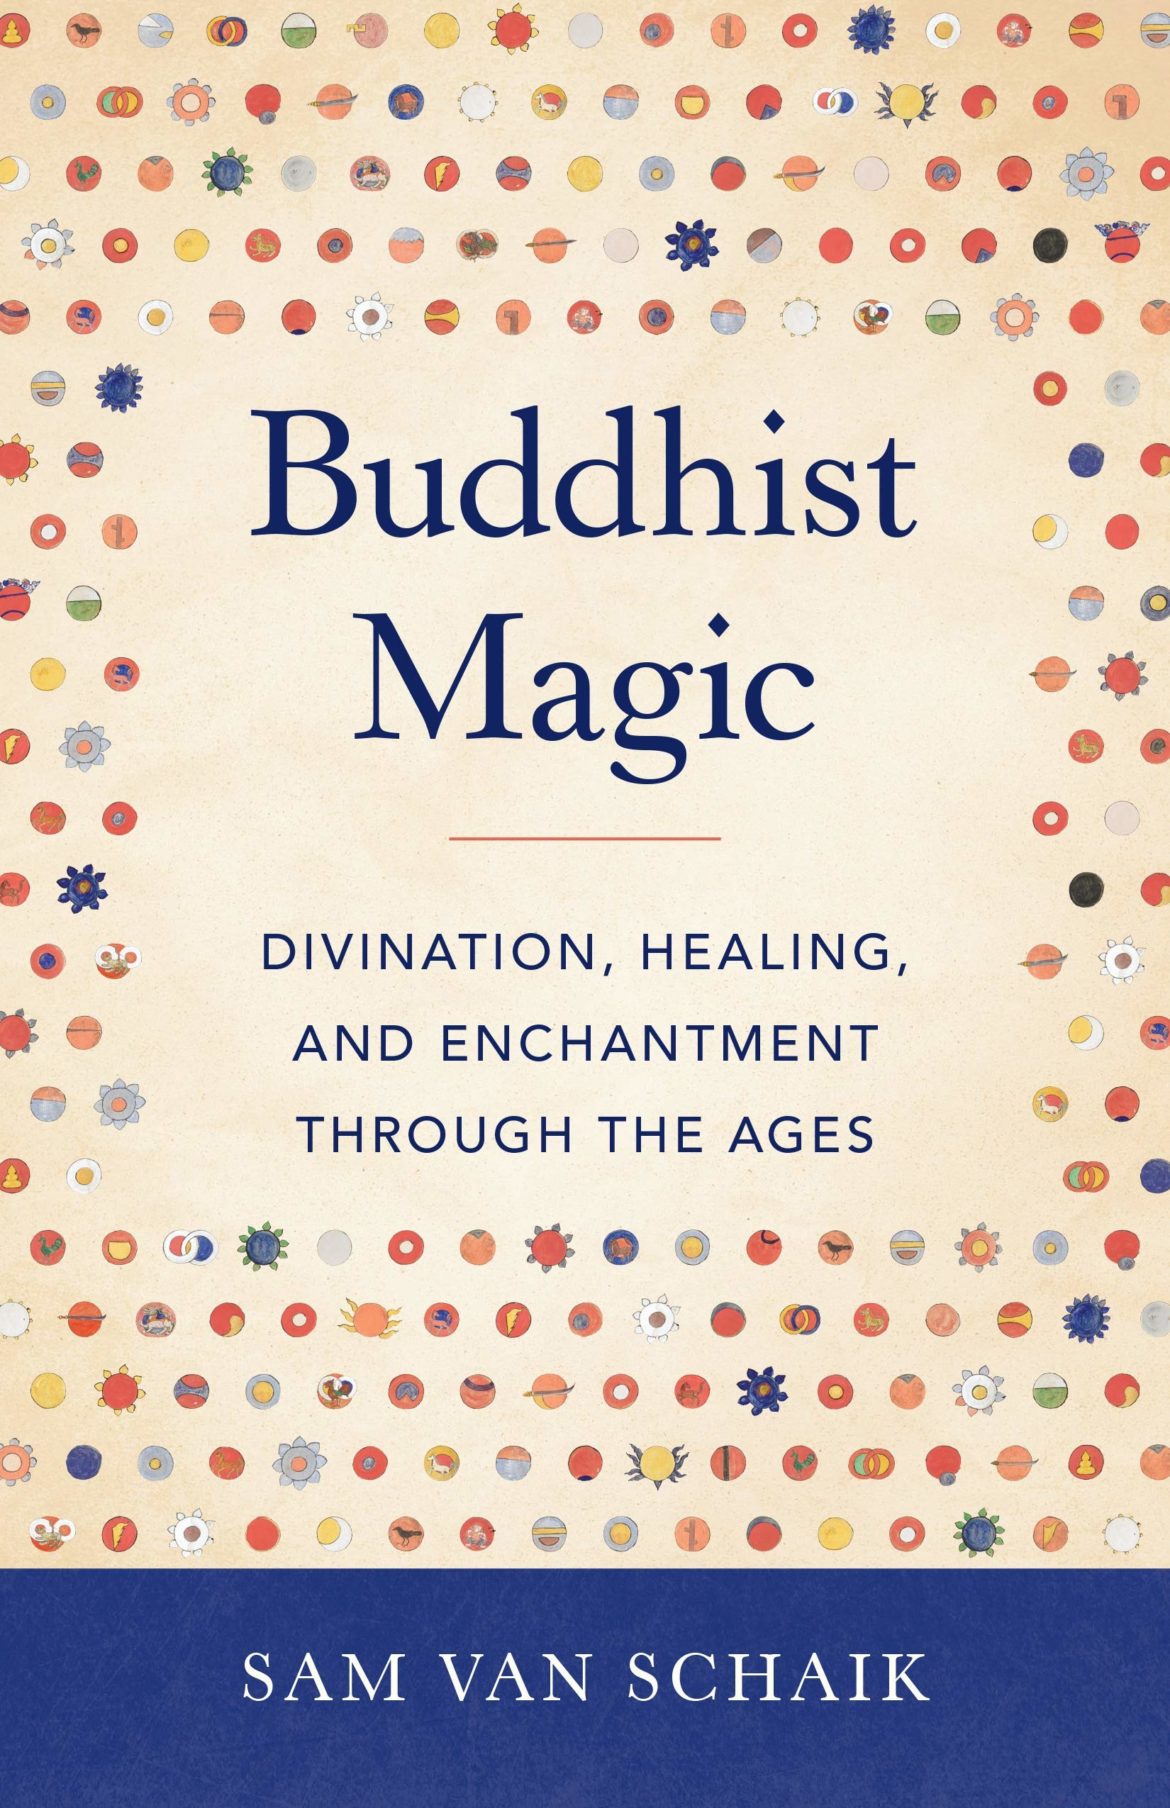 13 Buddhist Magic, Spells 1 Healing Mind & Body, by Sam Van Schaik